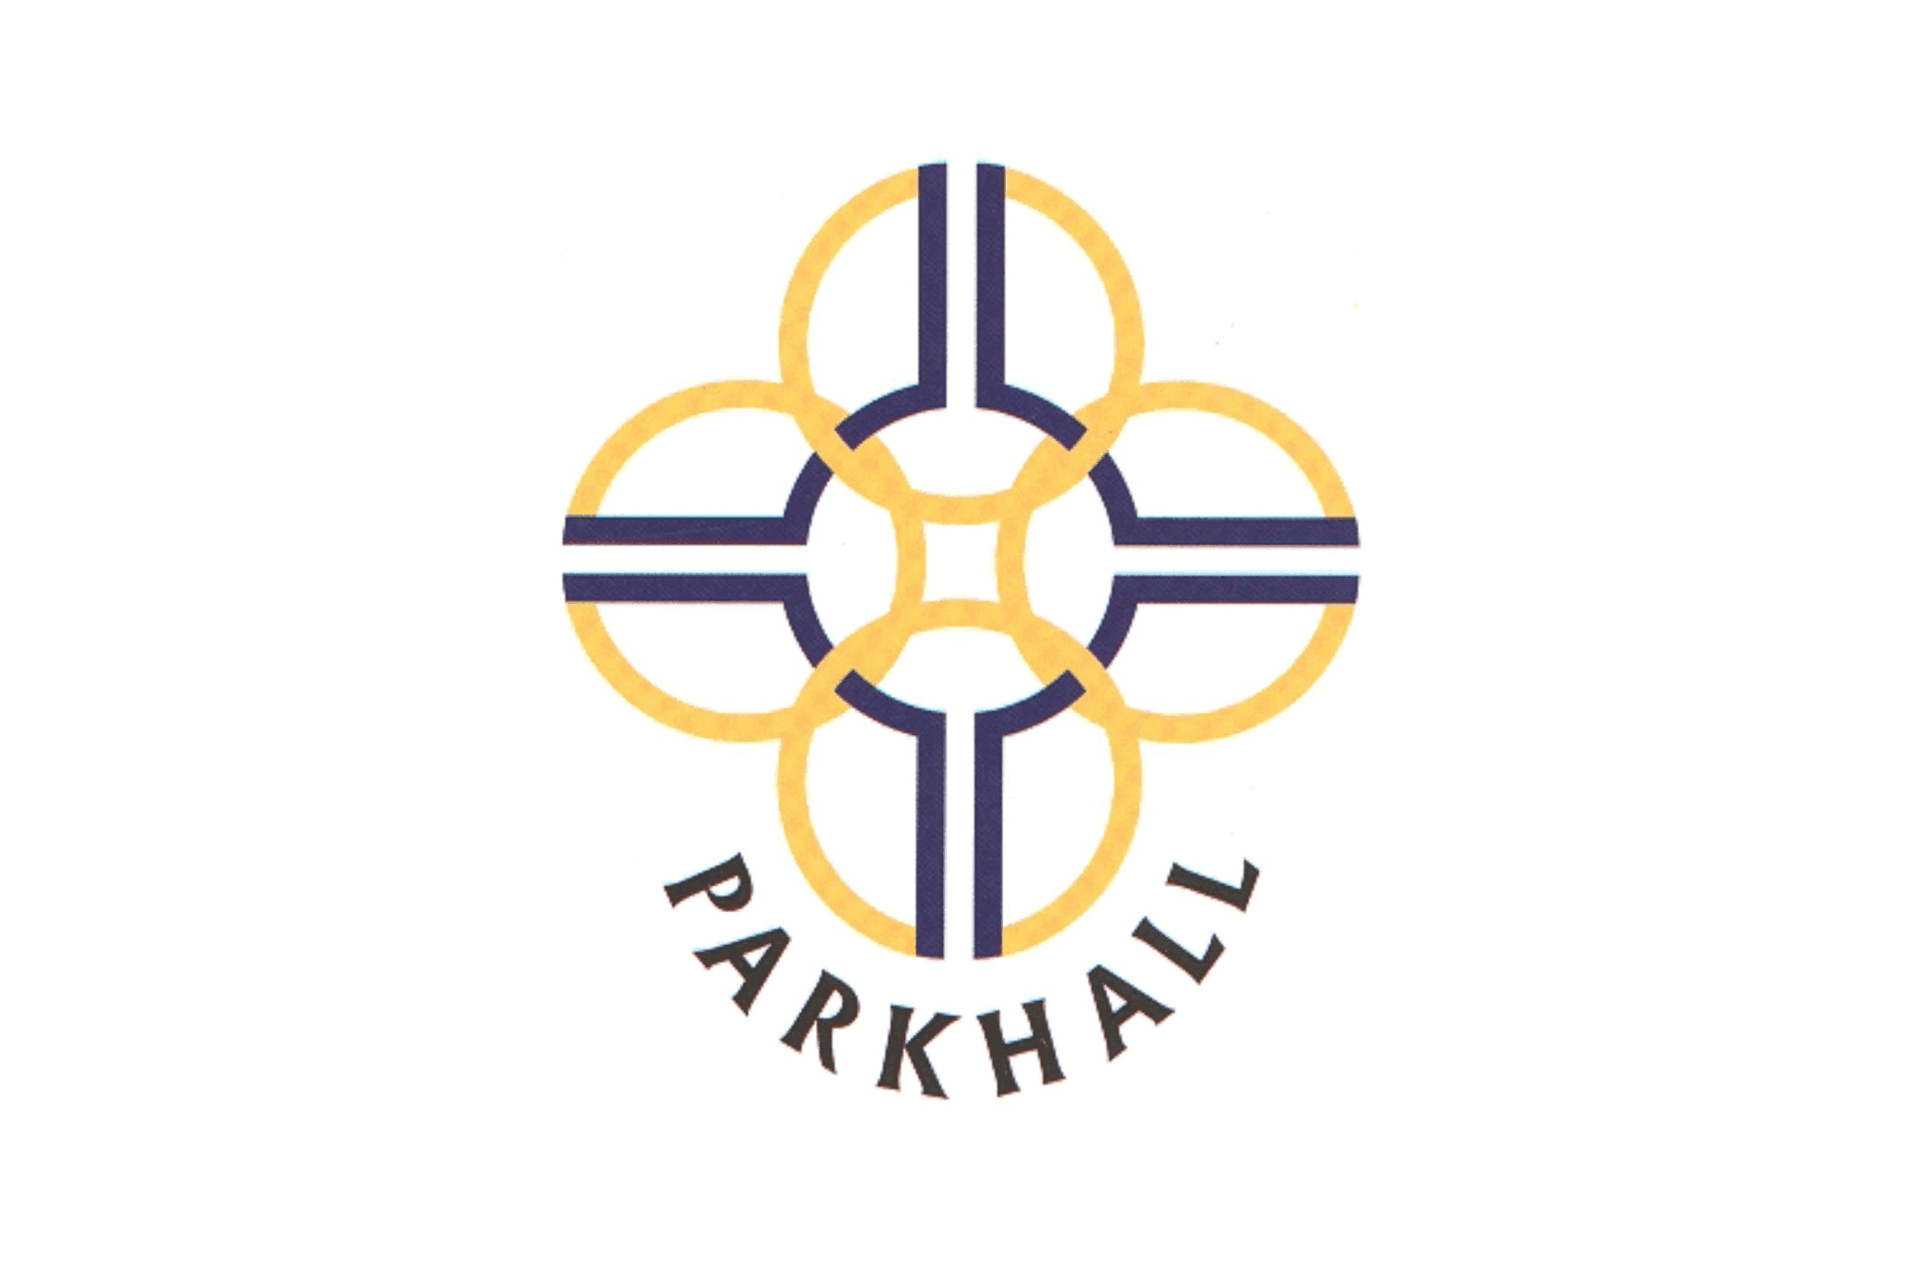 Parkhall